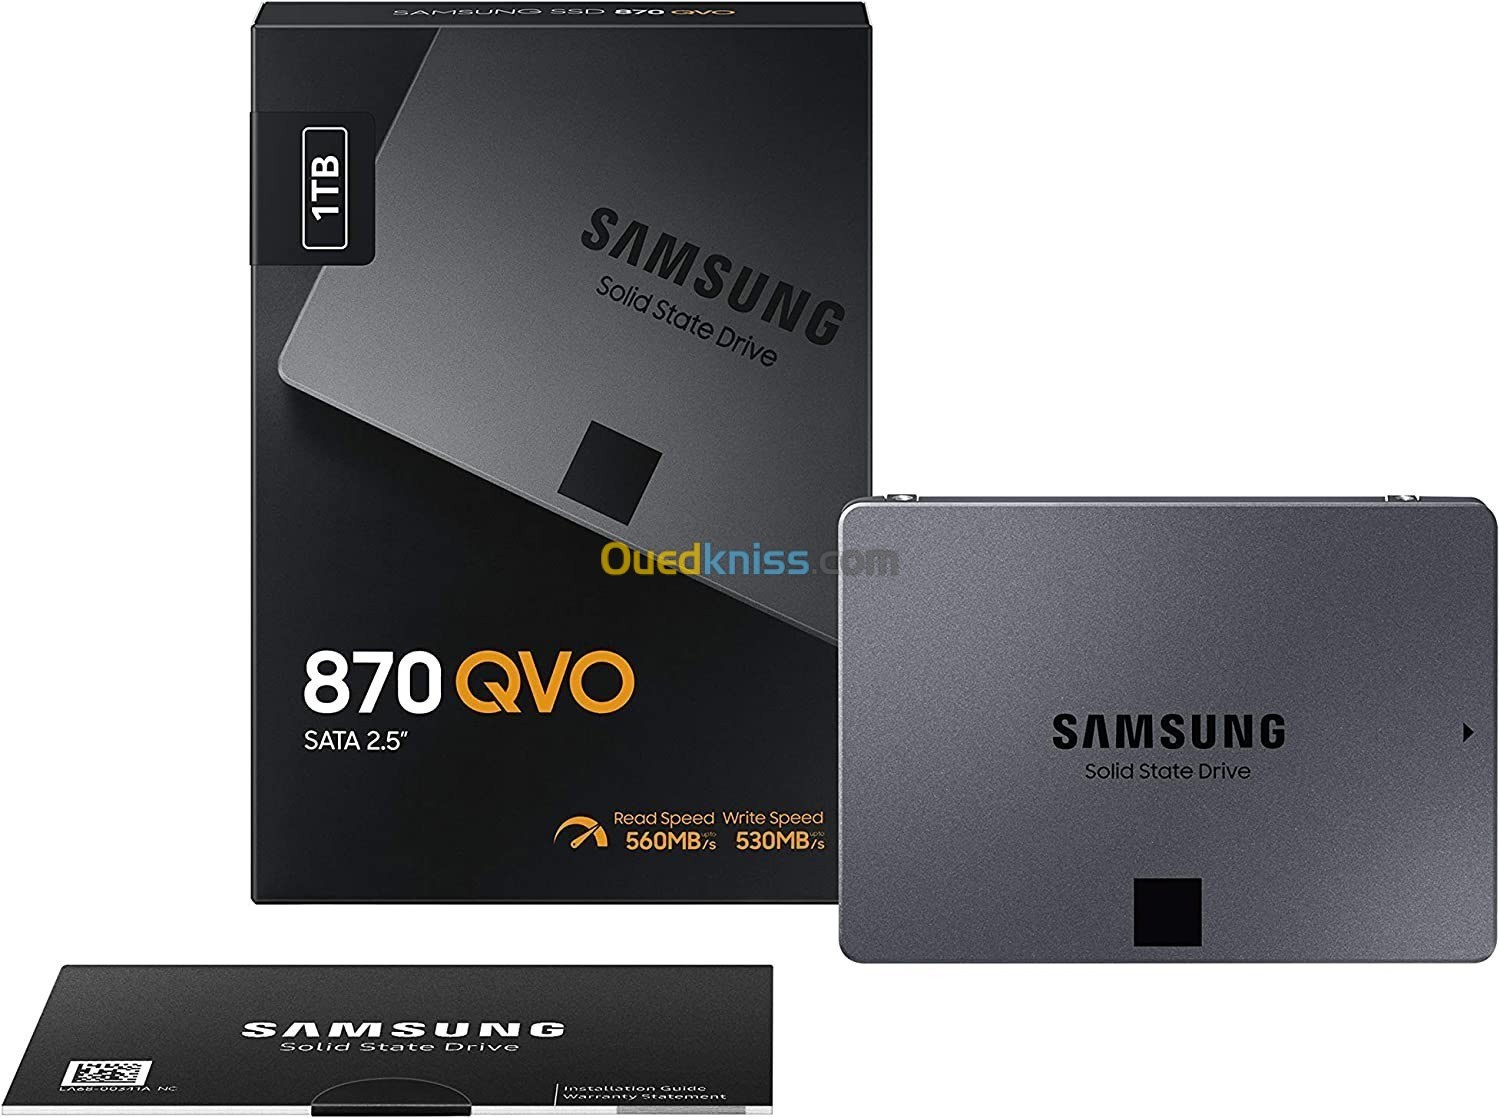 SAMSUNG DISQUE DUR SSD 500GB INTERNE/V-NAND SSD 860 EVO SATA 6 GB/S